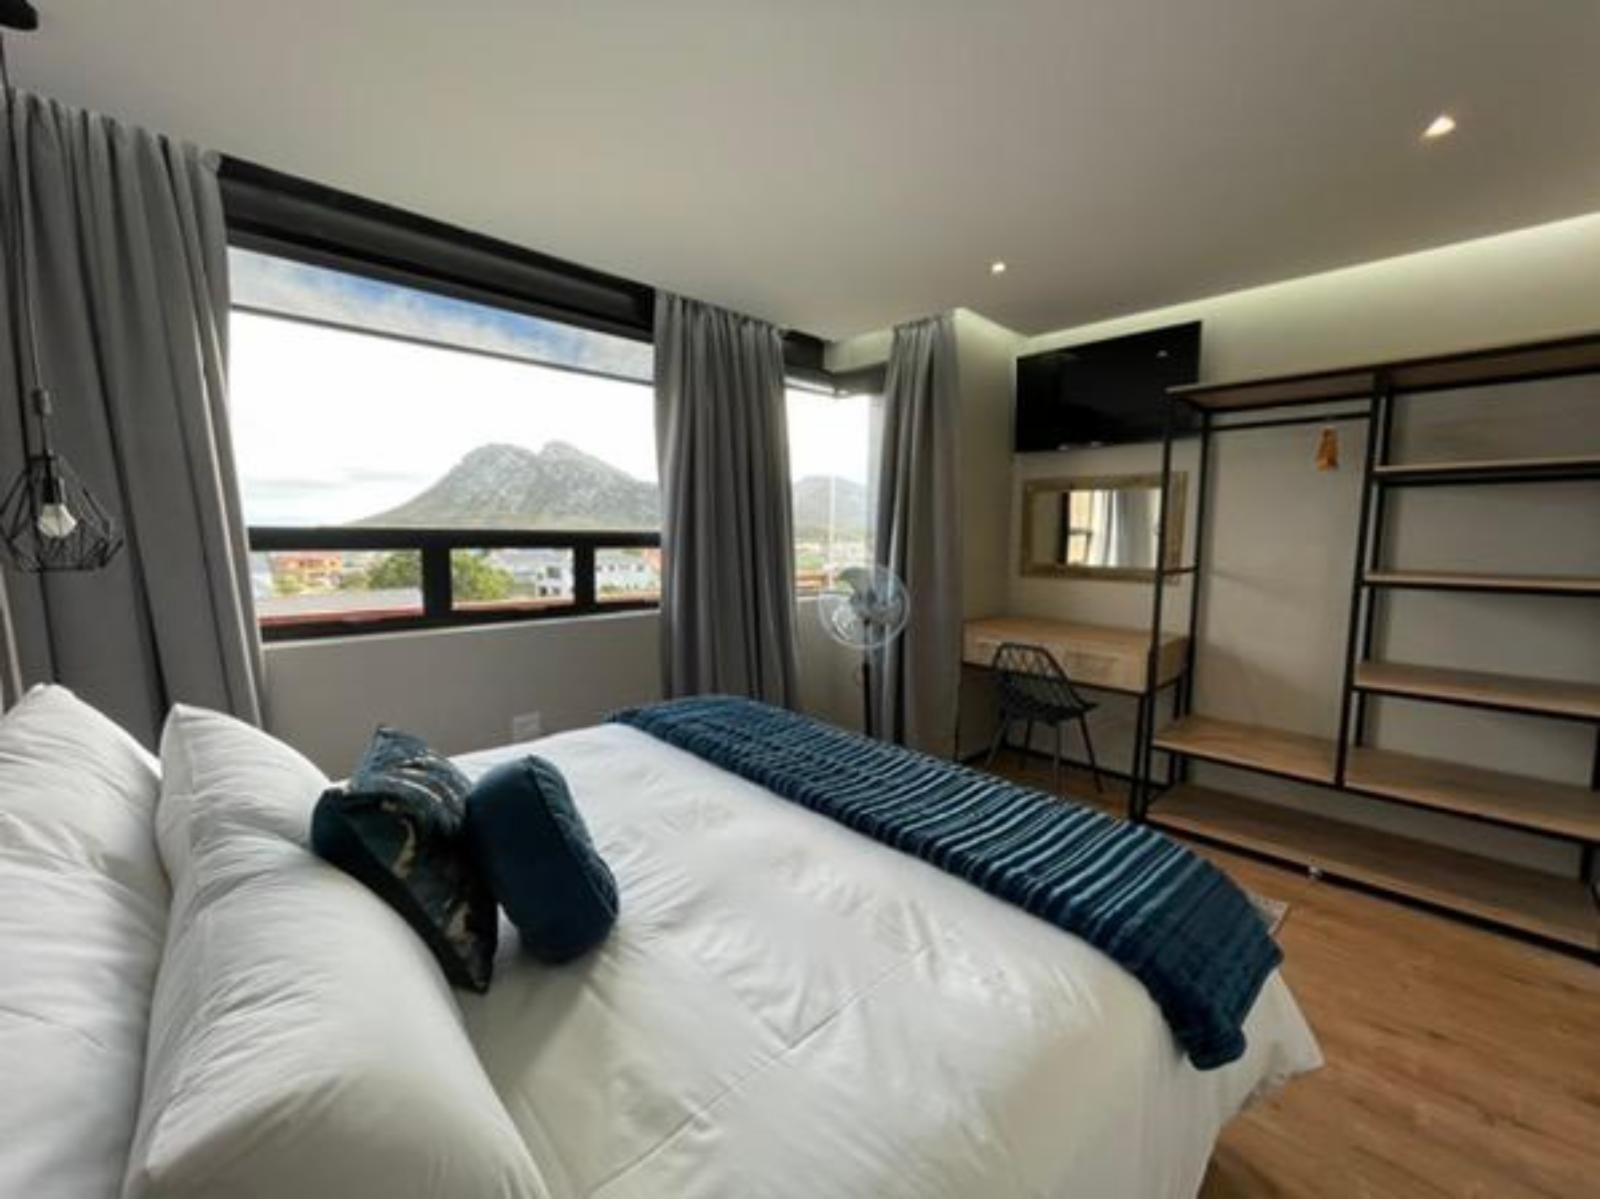 Escape Pringle Bay Pringle Bay Western Cape South Africa Bedroom